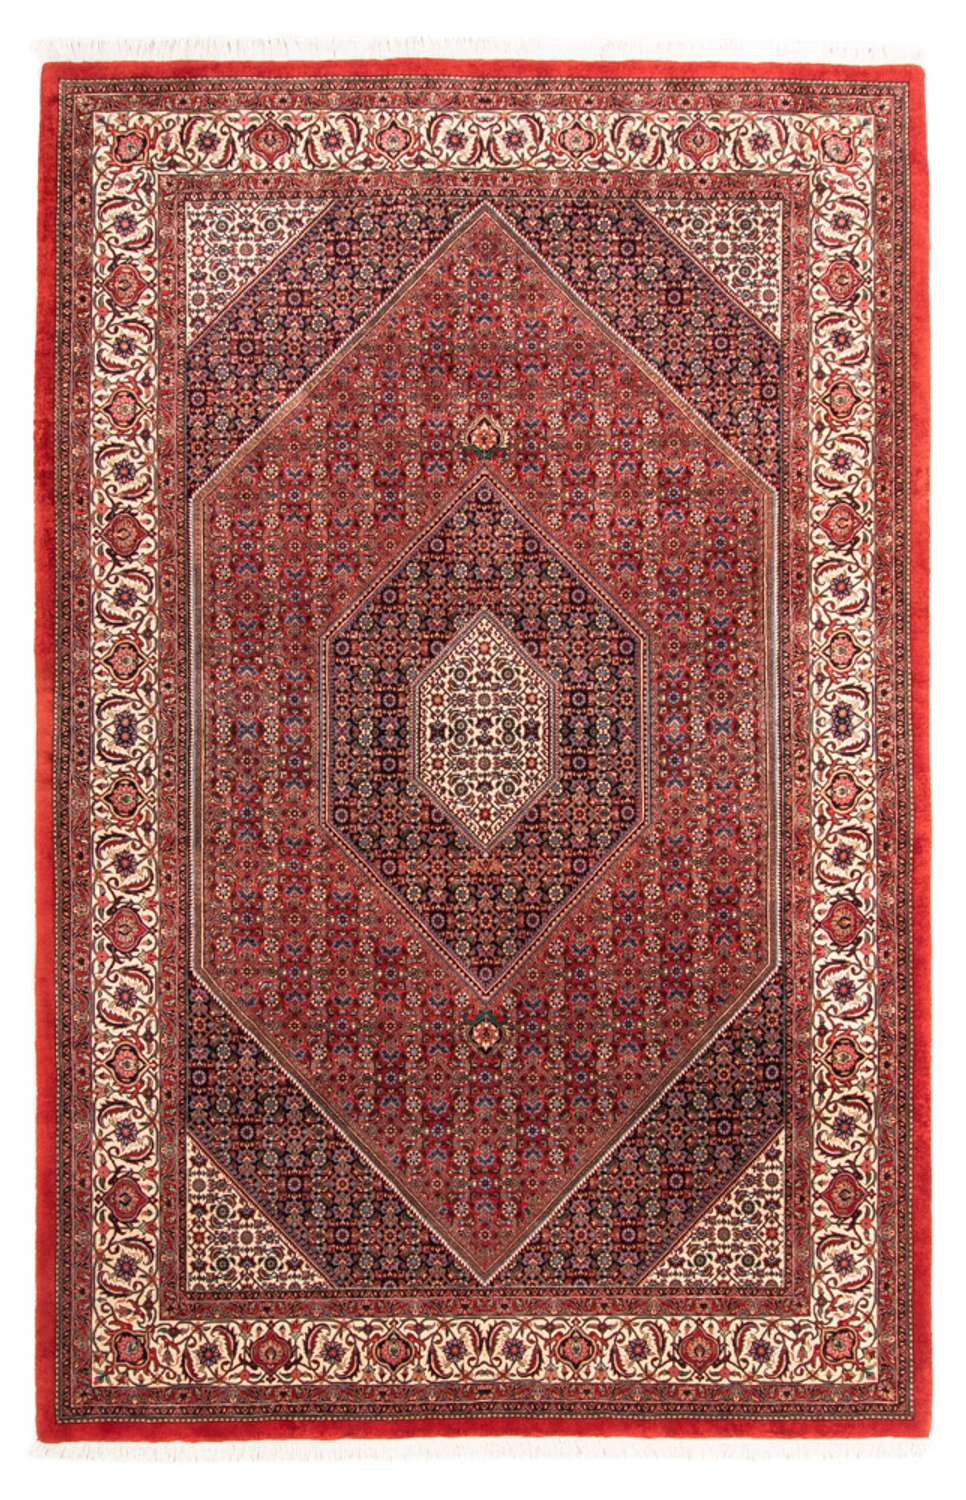 Persisk teppe - Bijar - Royal - 310 x 205 cm - rød